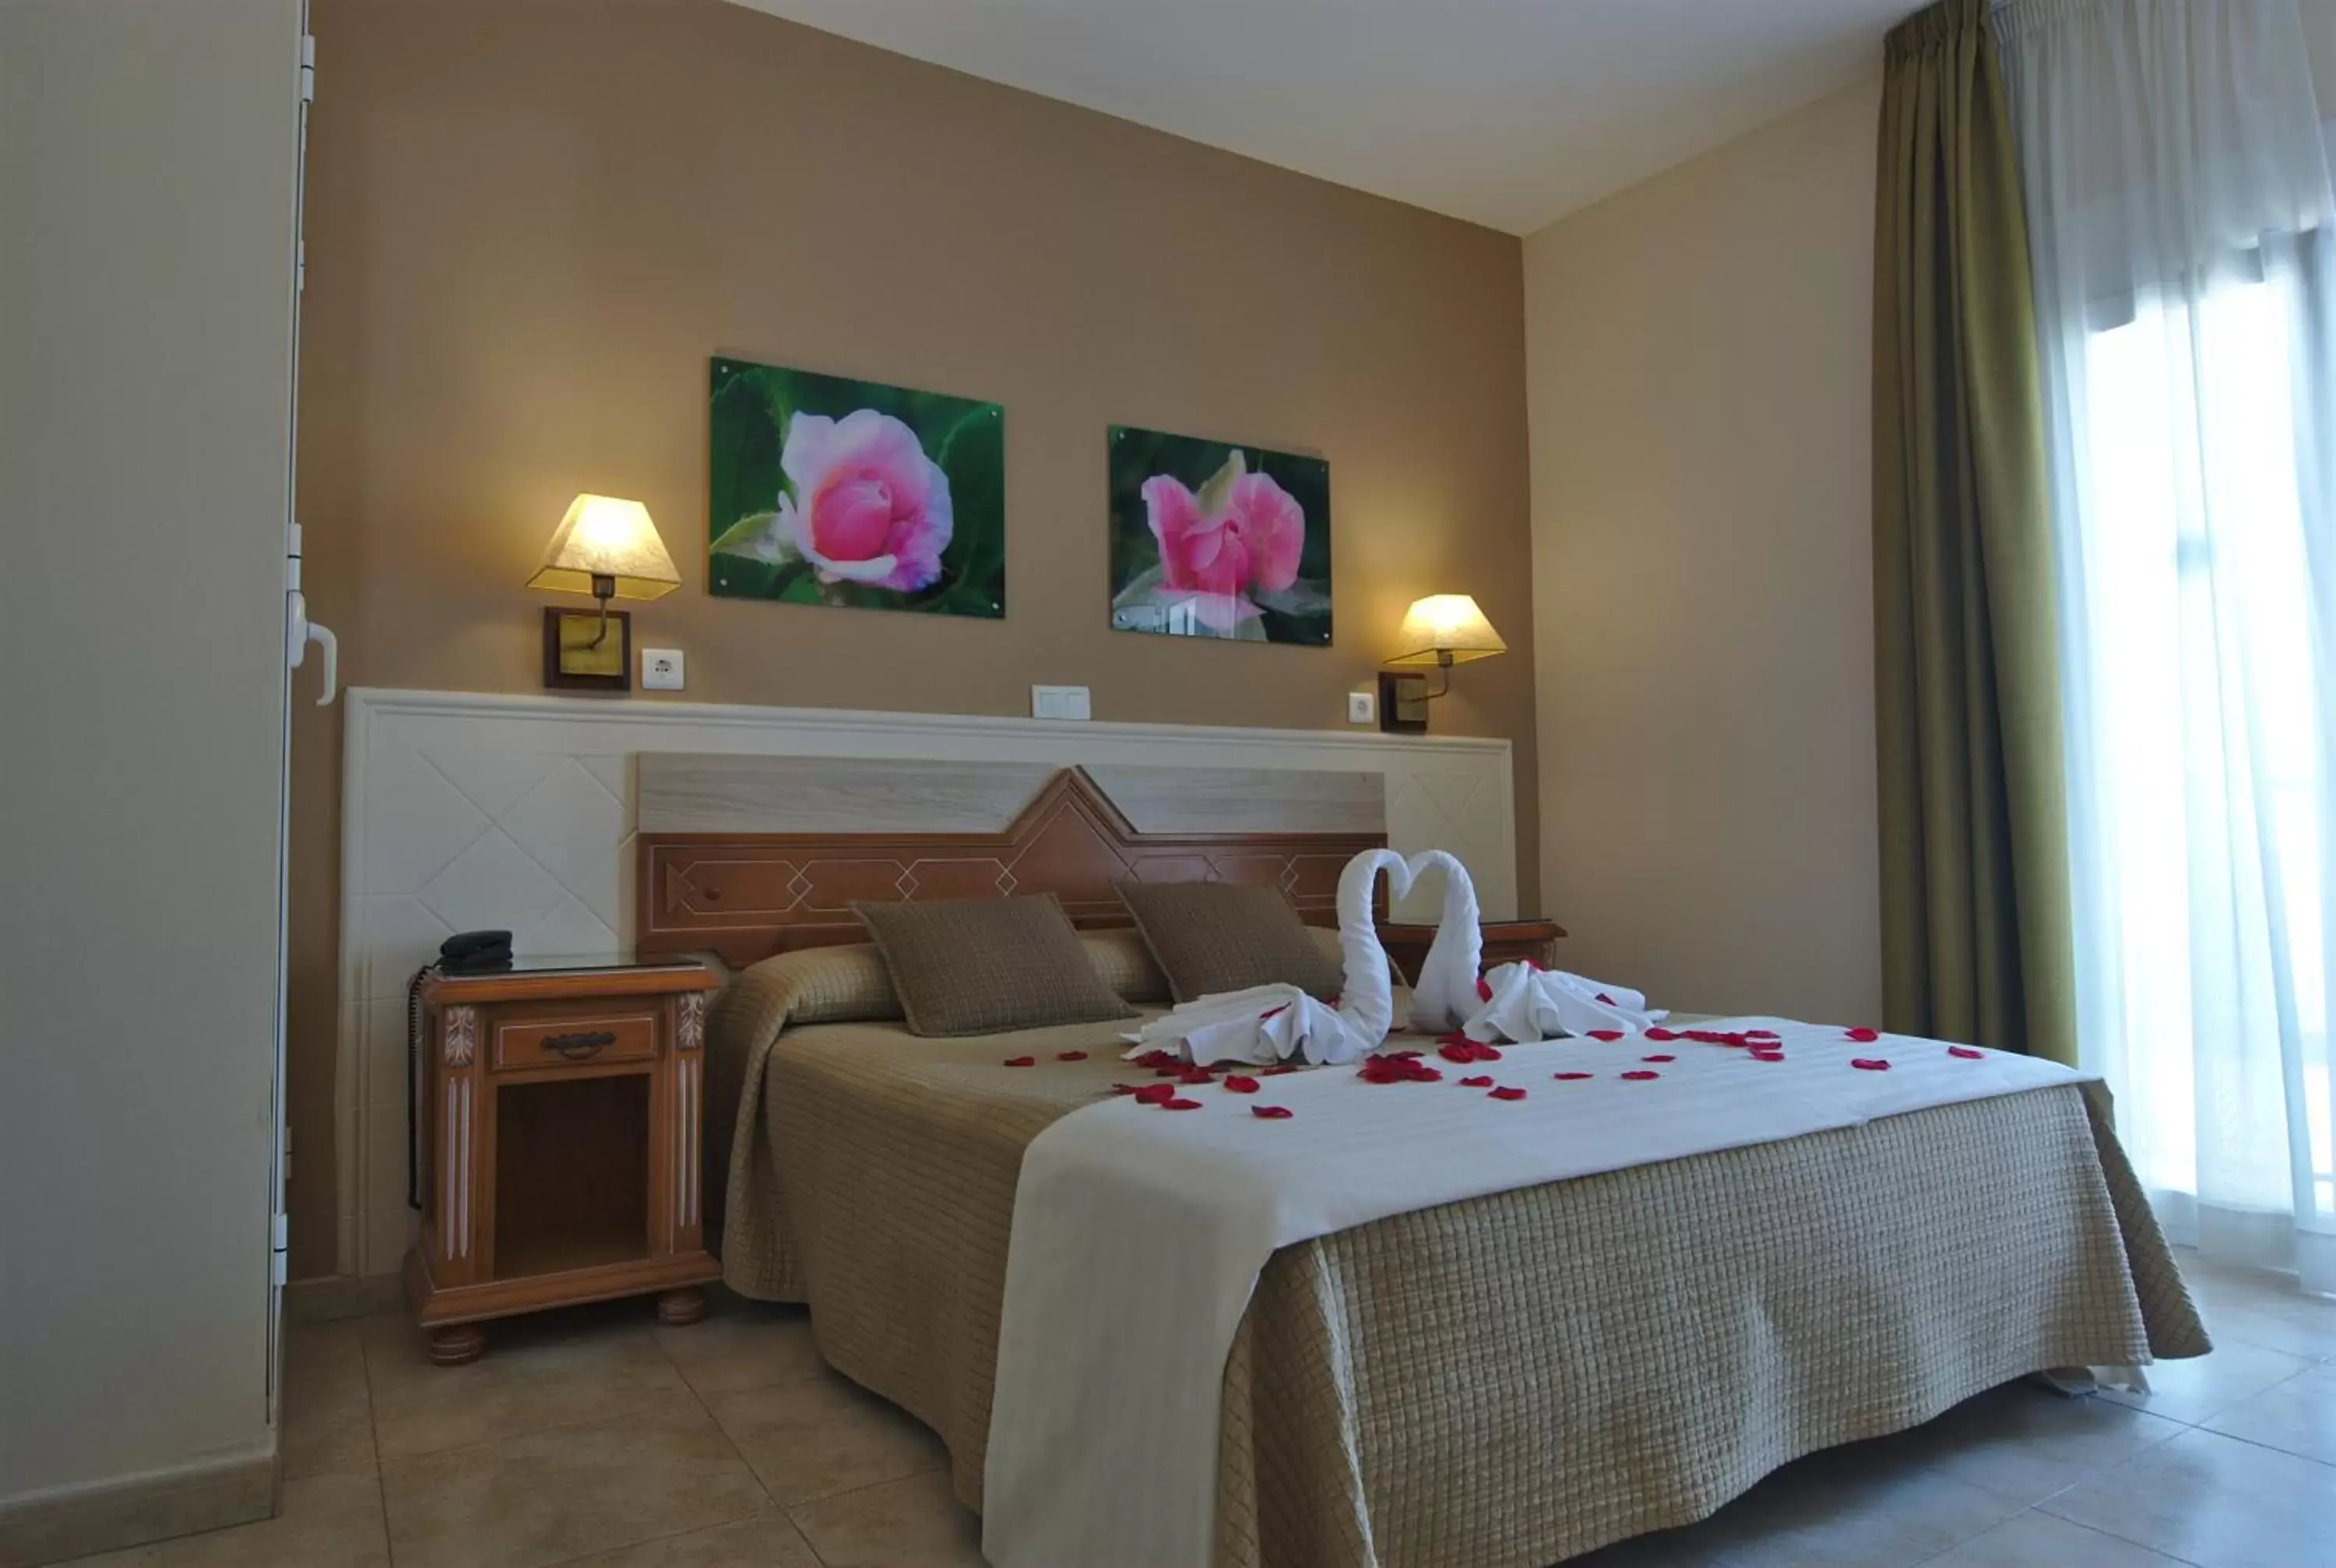 Day, Room Photo in Hotel Puerta del Mar